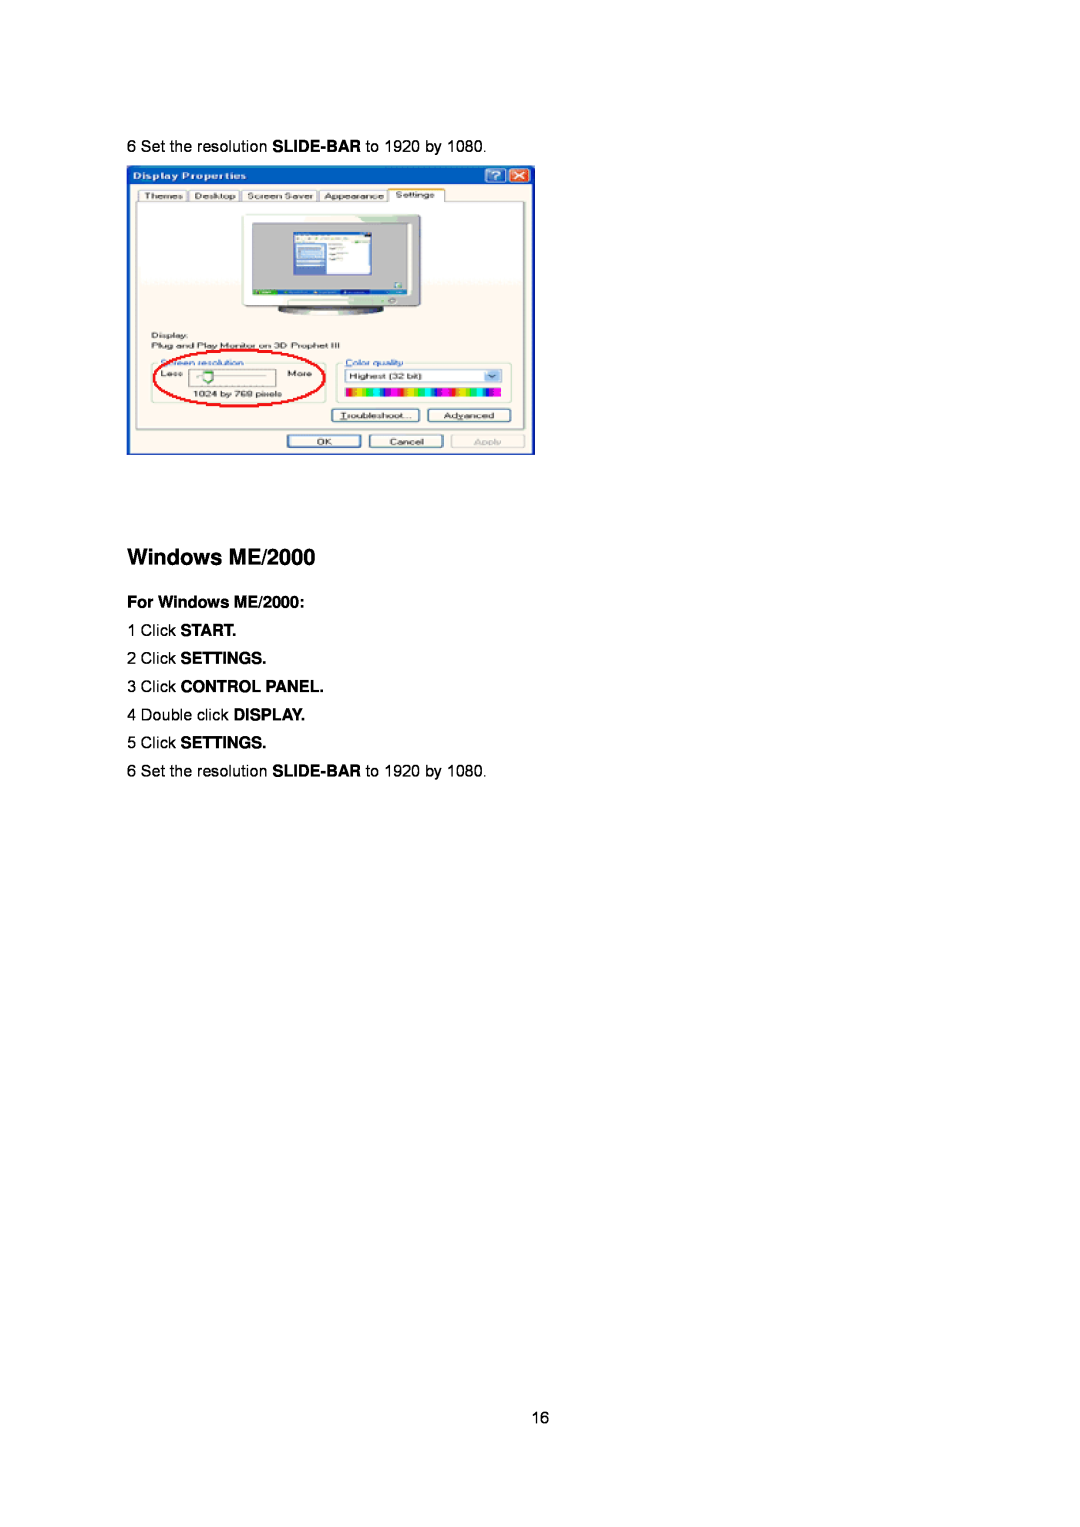 AOC i2340Ve manual For Windows ME/2000, Click SETTINGS 3 Click CONTROL PANEL 